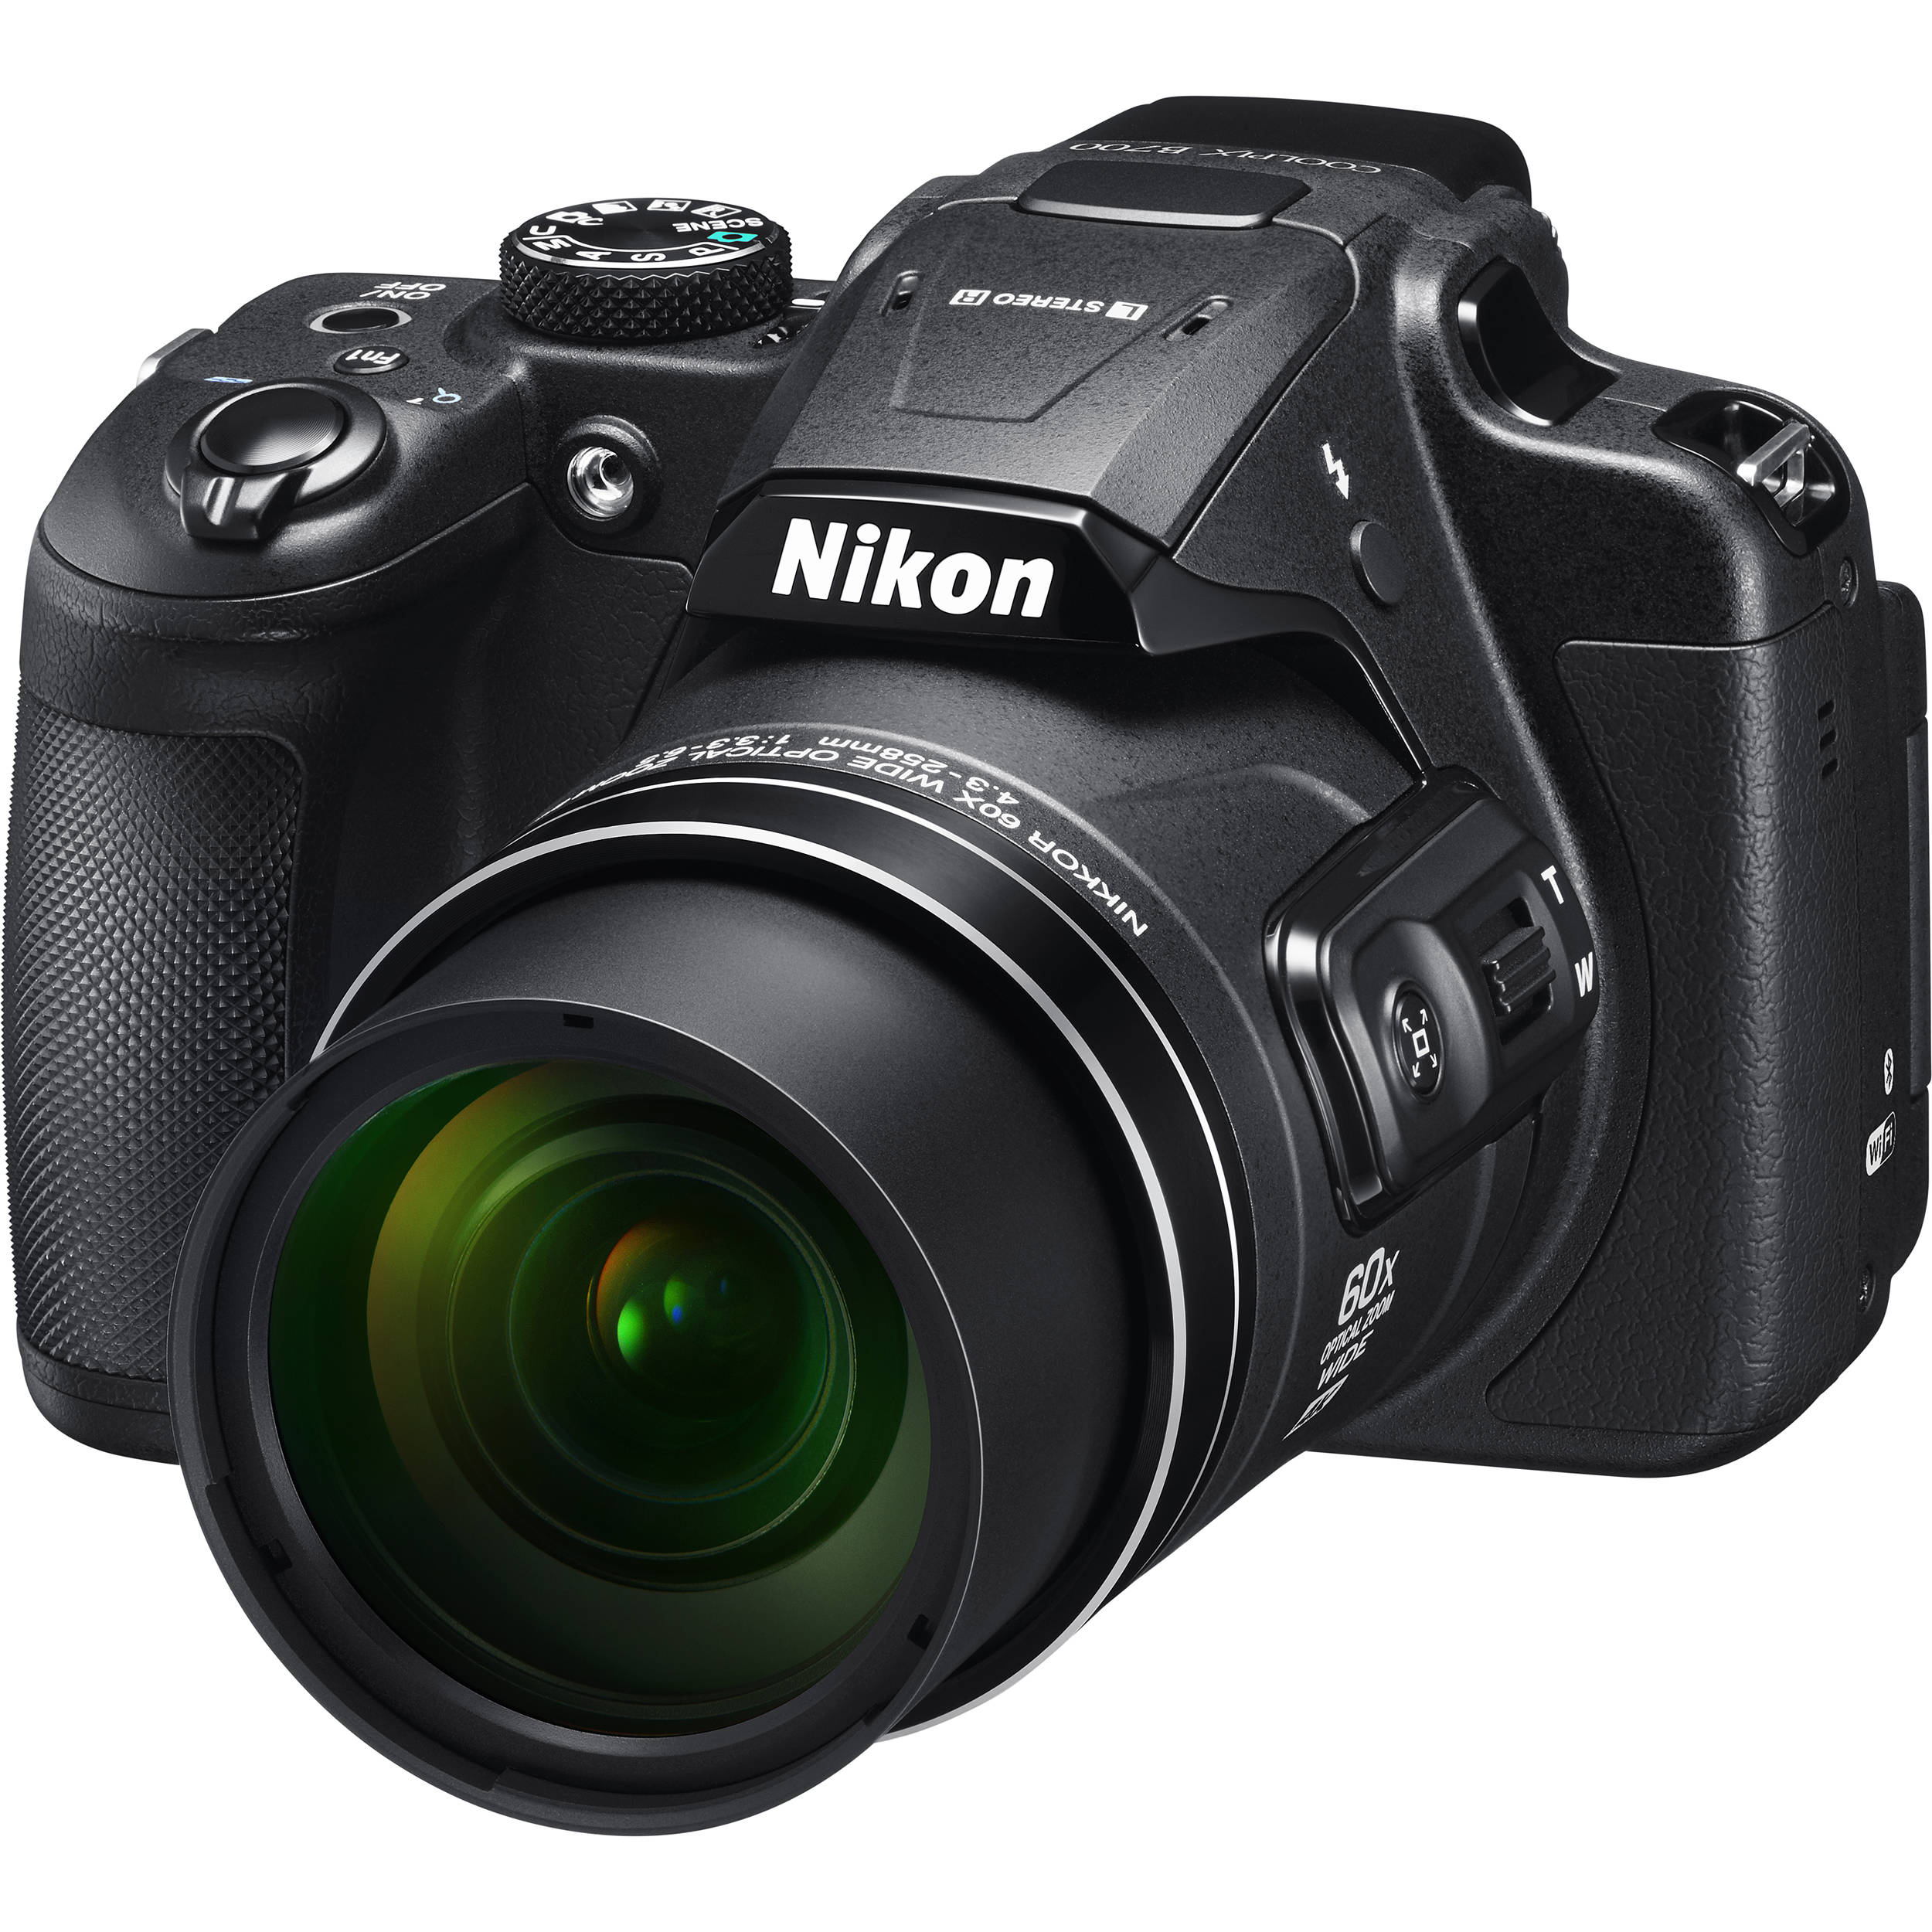 Nikon digital camera photo